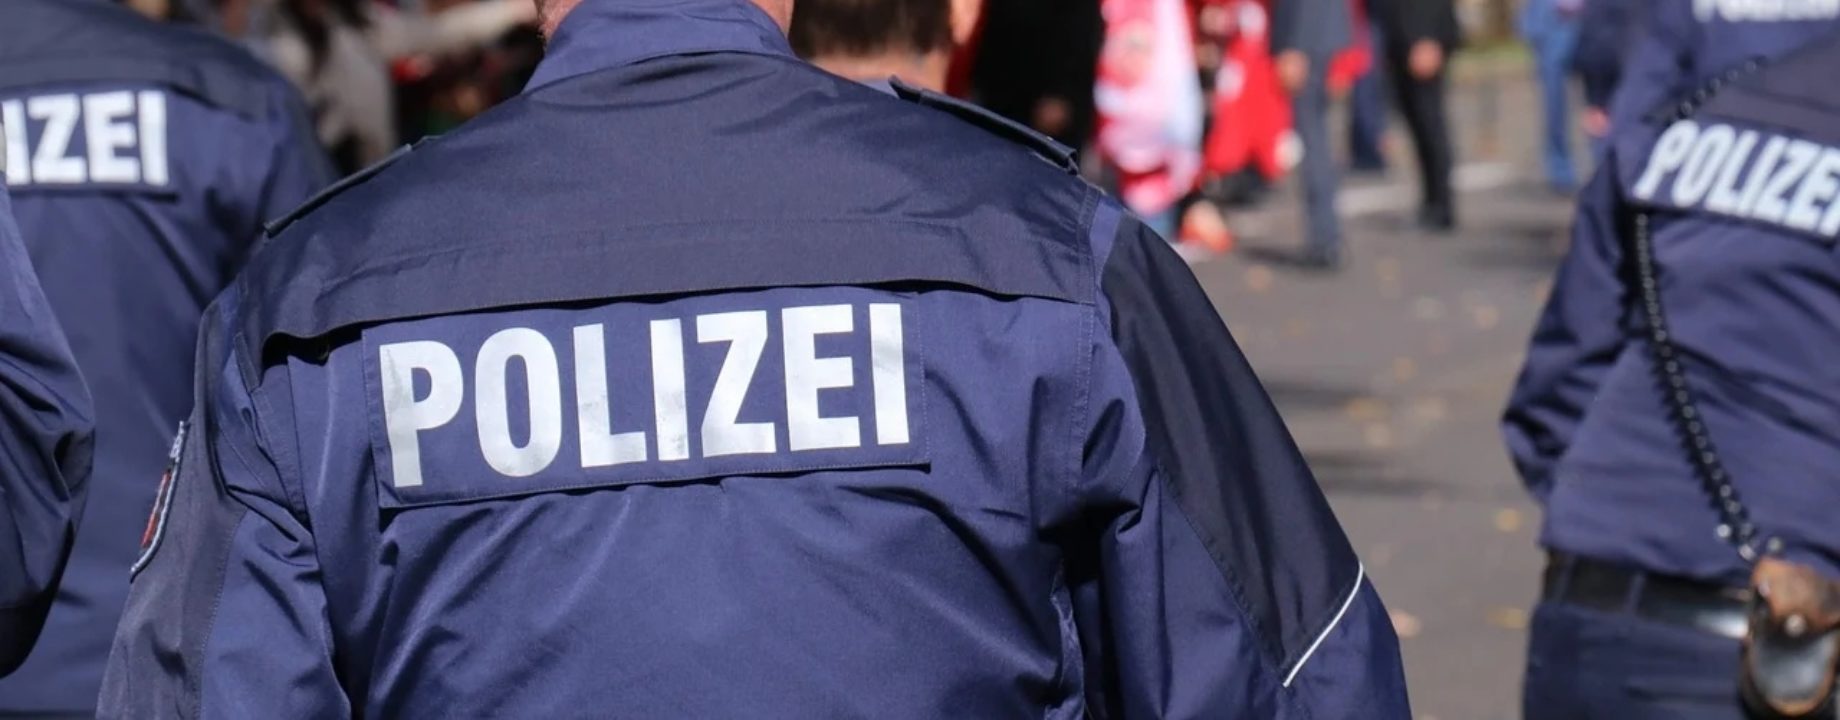 Polizei Rendőrség pixabay